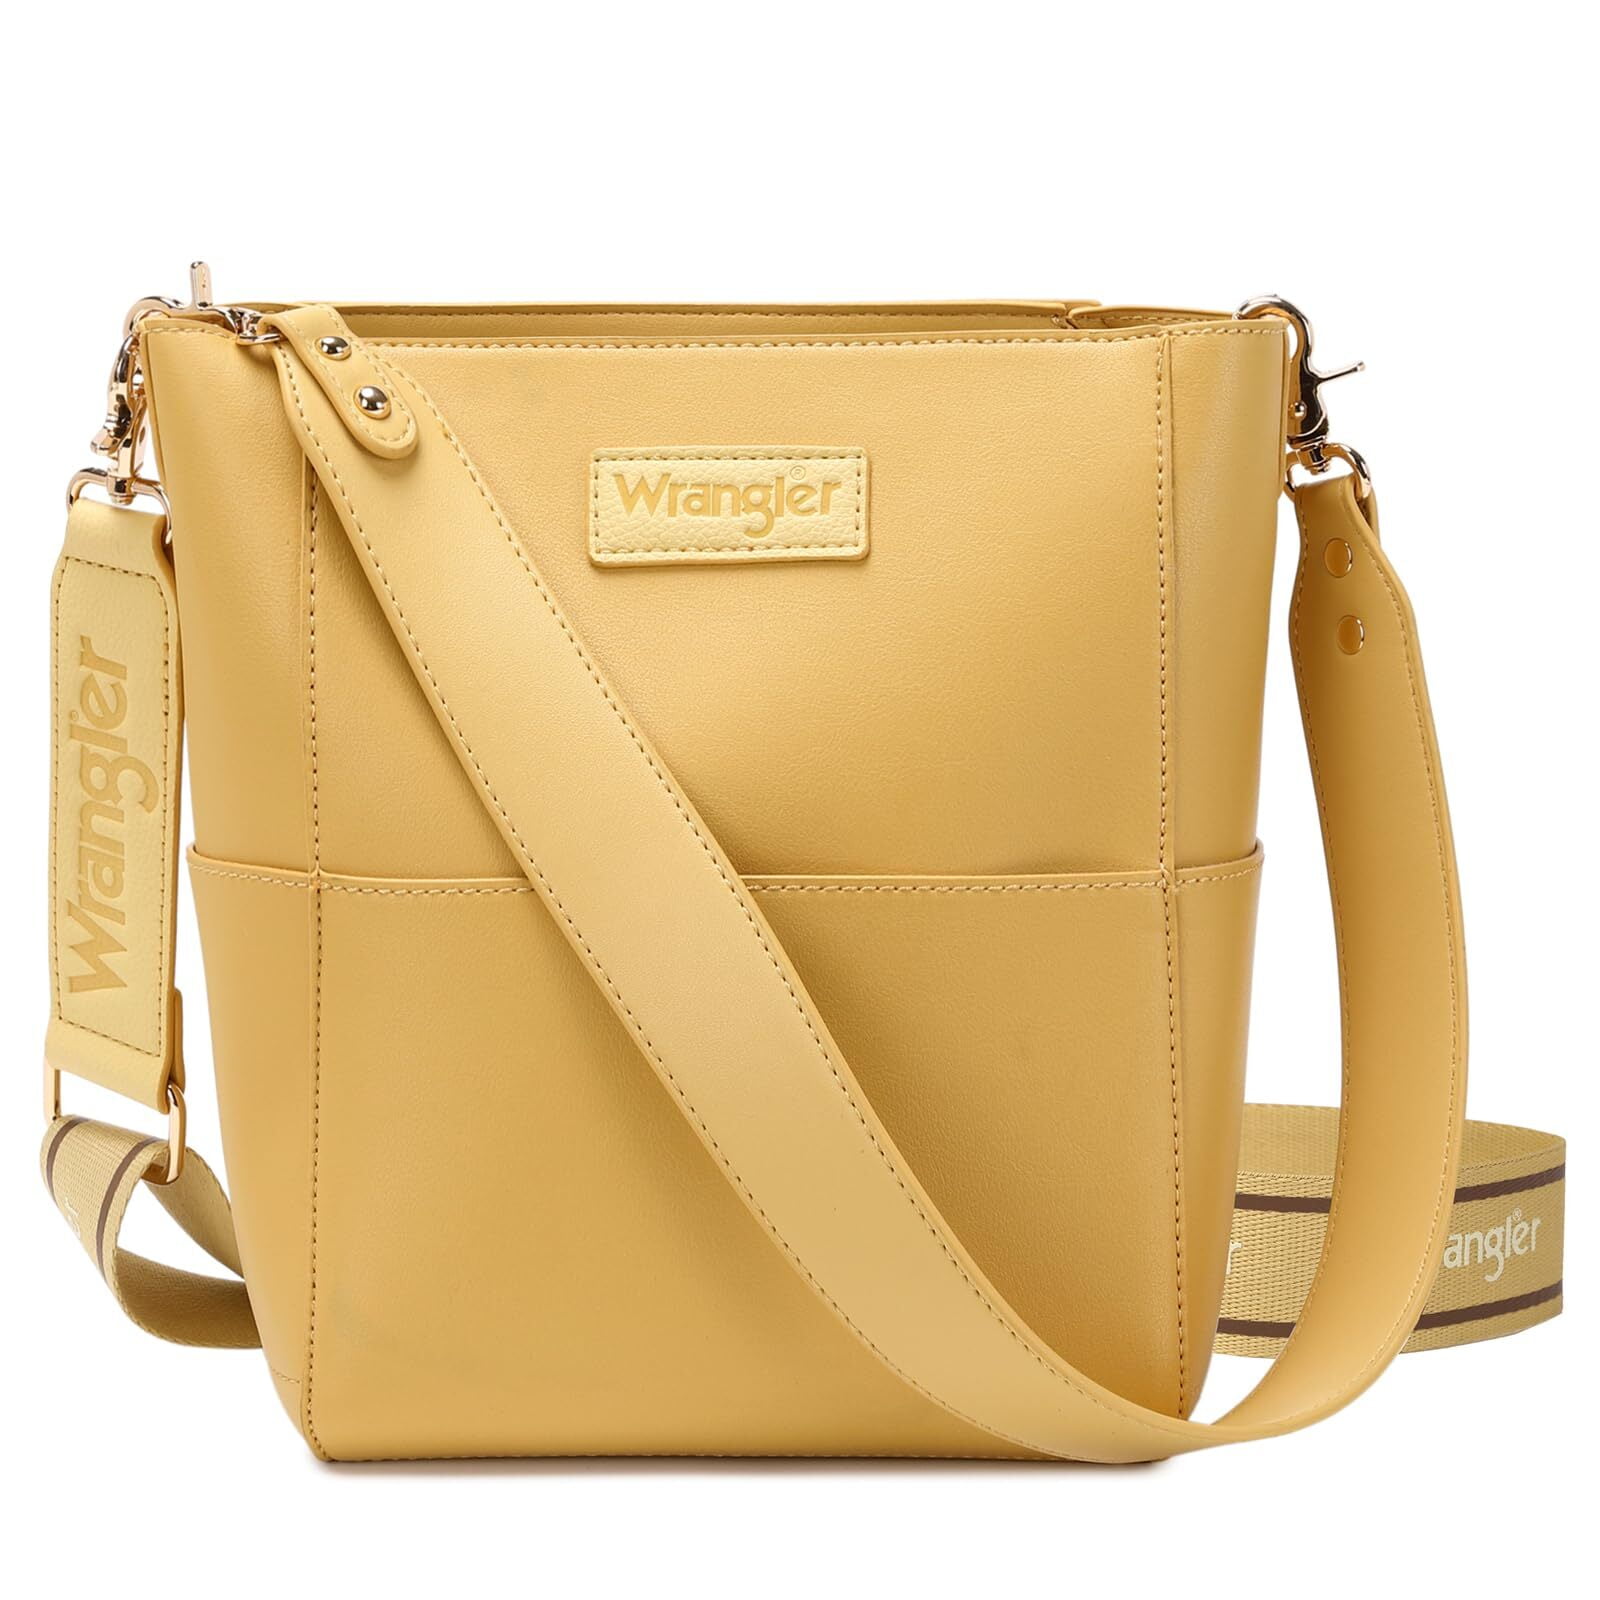 Wrangler Bucket Handbags for Women Crossbody Shoulder Purse with ...